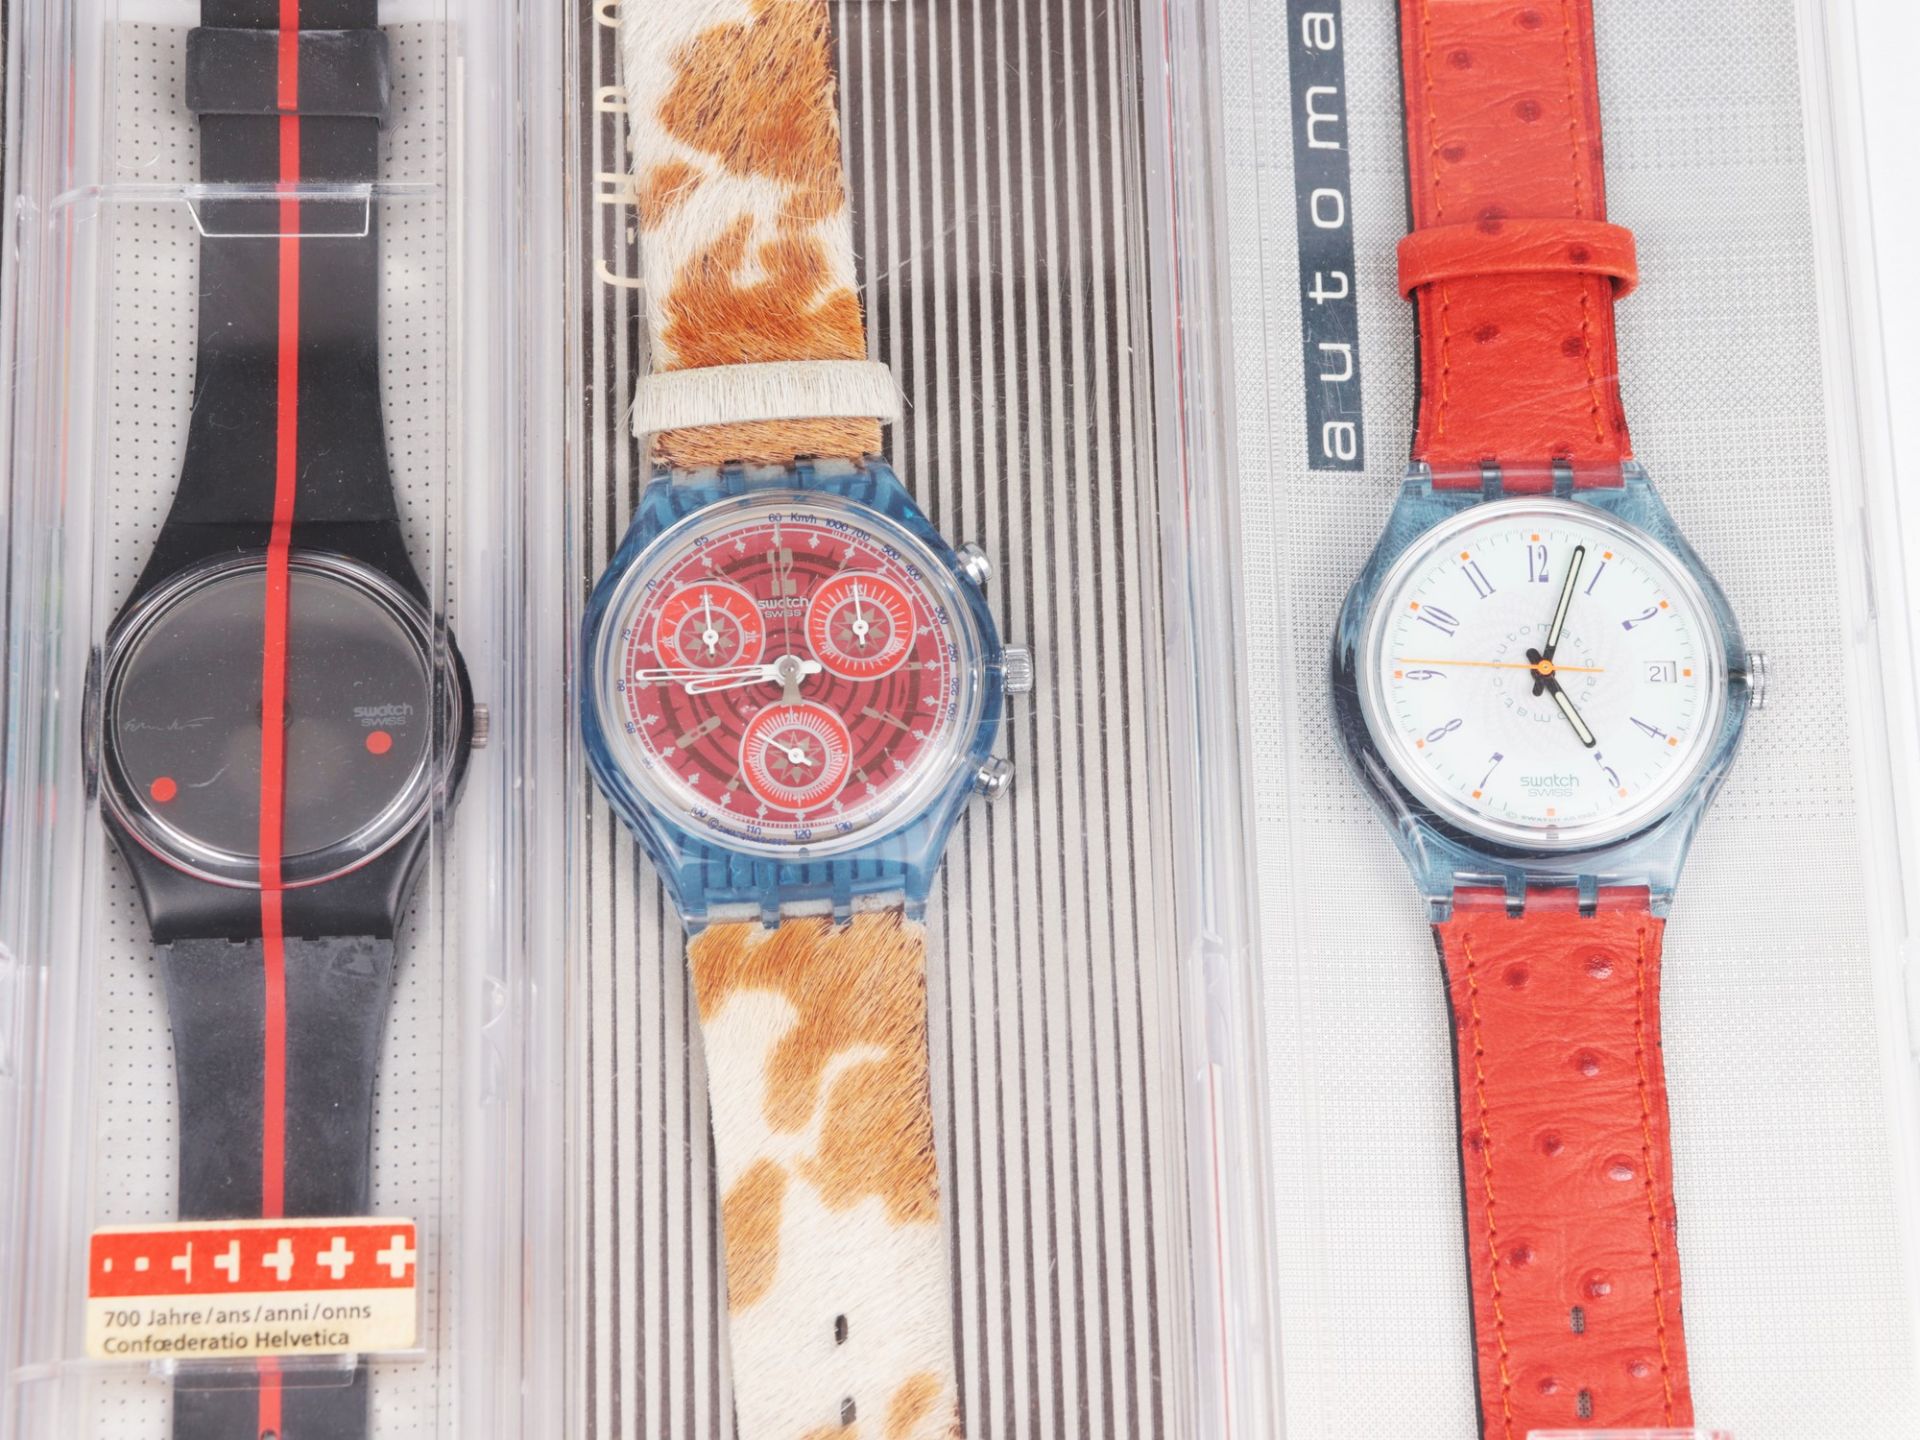 Swatch - Armbanduhren 5 St, Schweiz, versch. Ausführungen, 2x Automatic, fkt.tüchtig, 3x Fkt. - Bild 2 aus 4